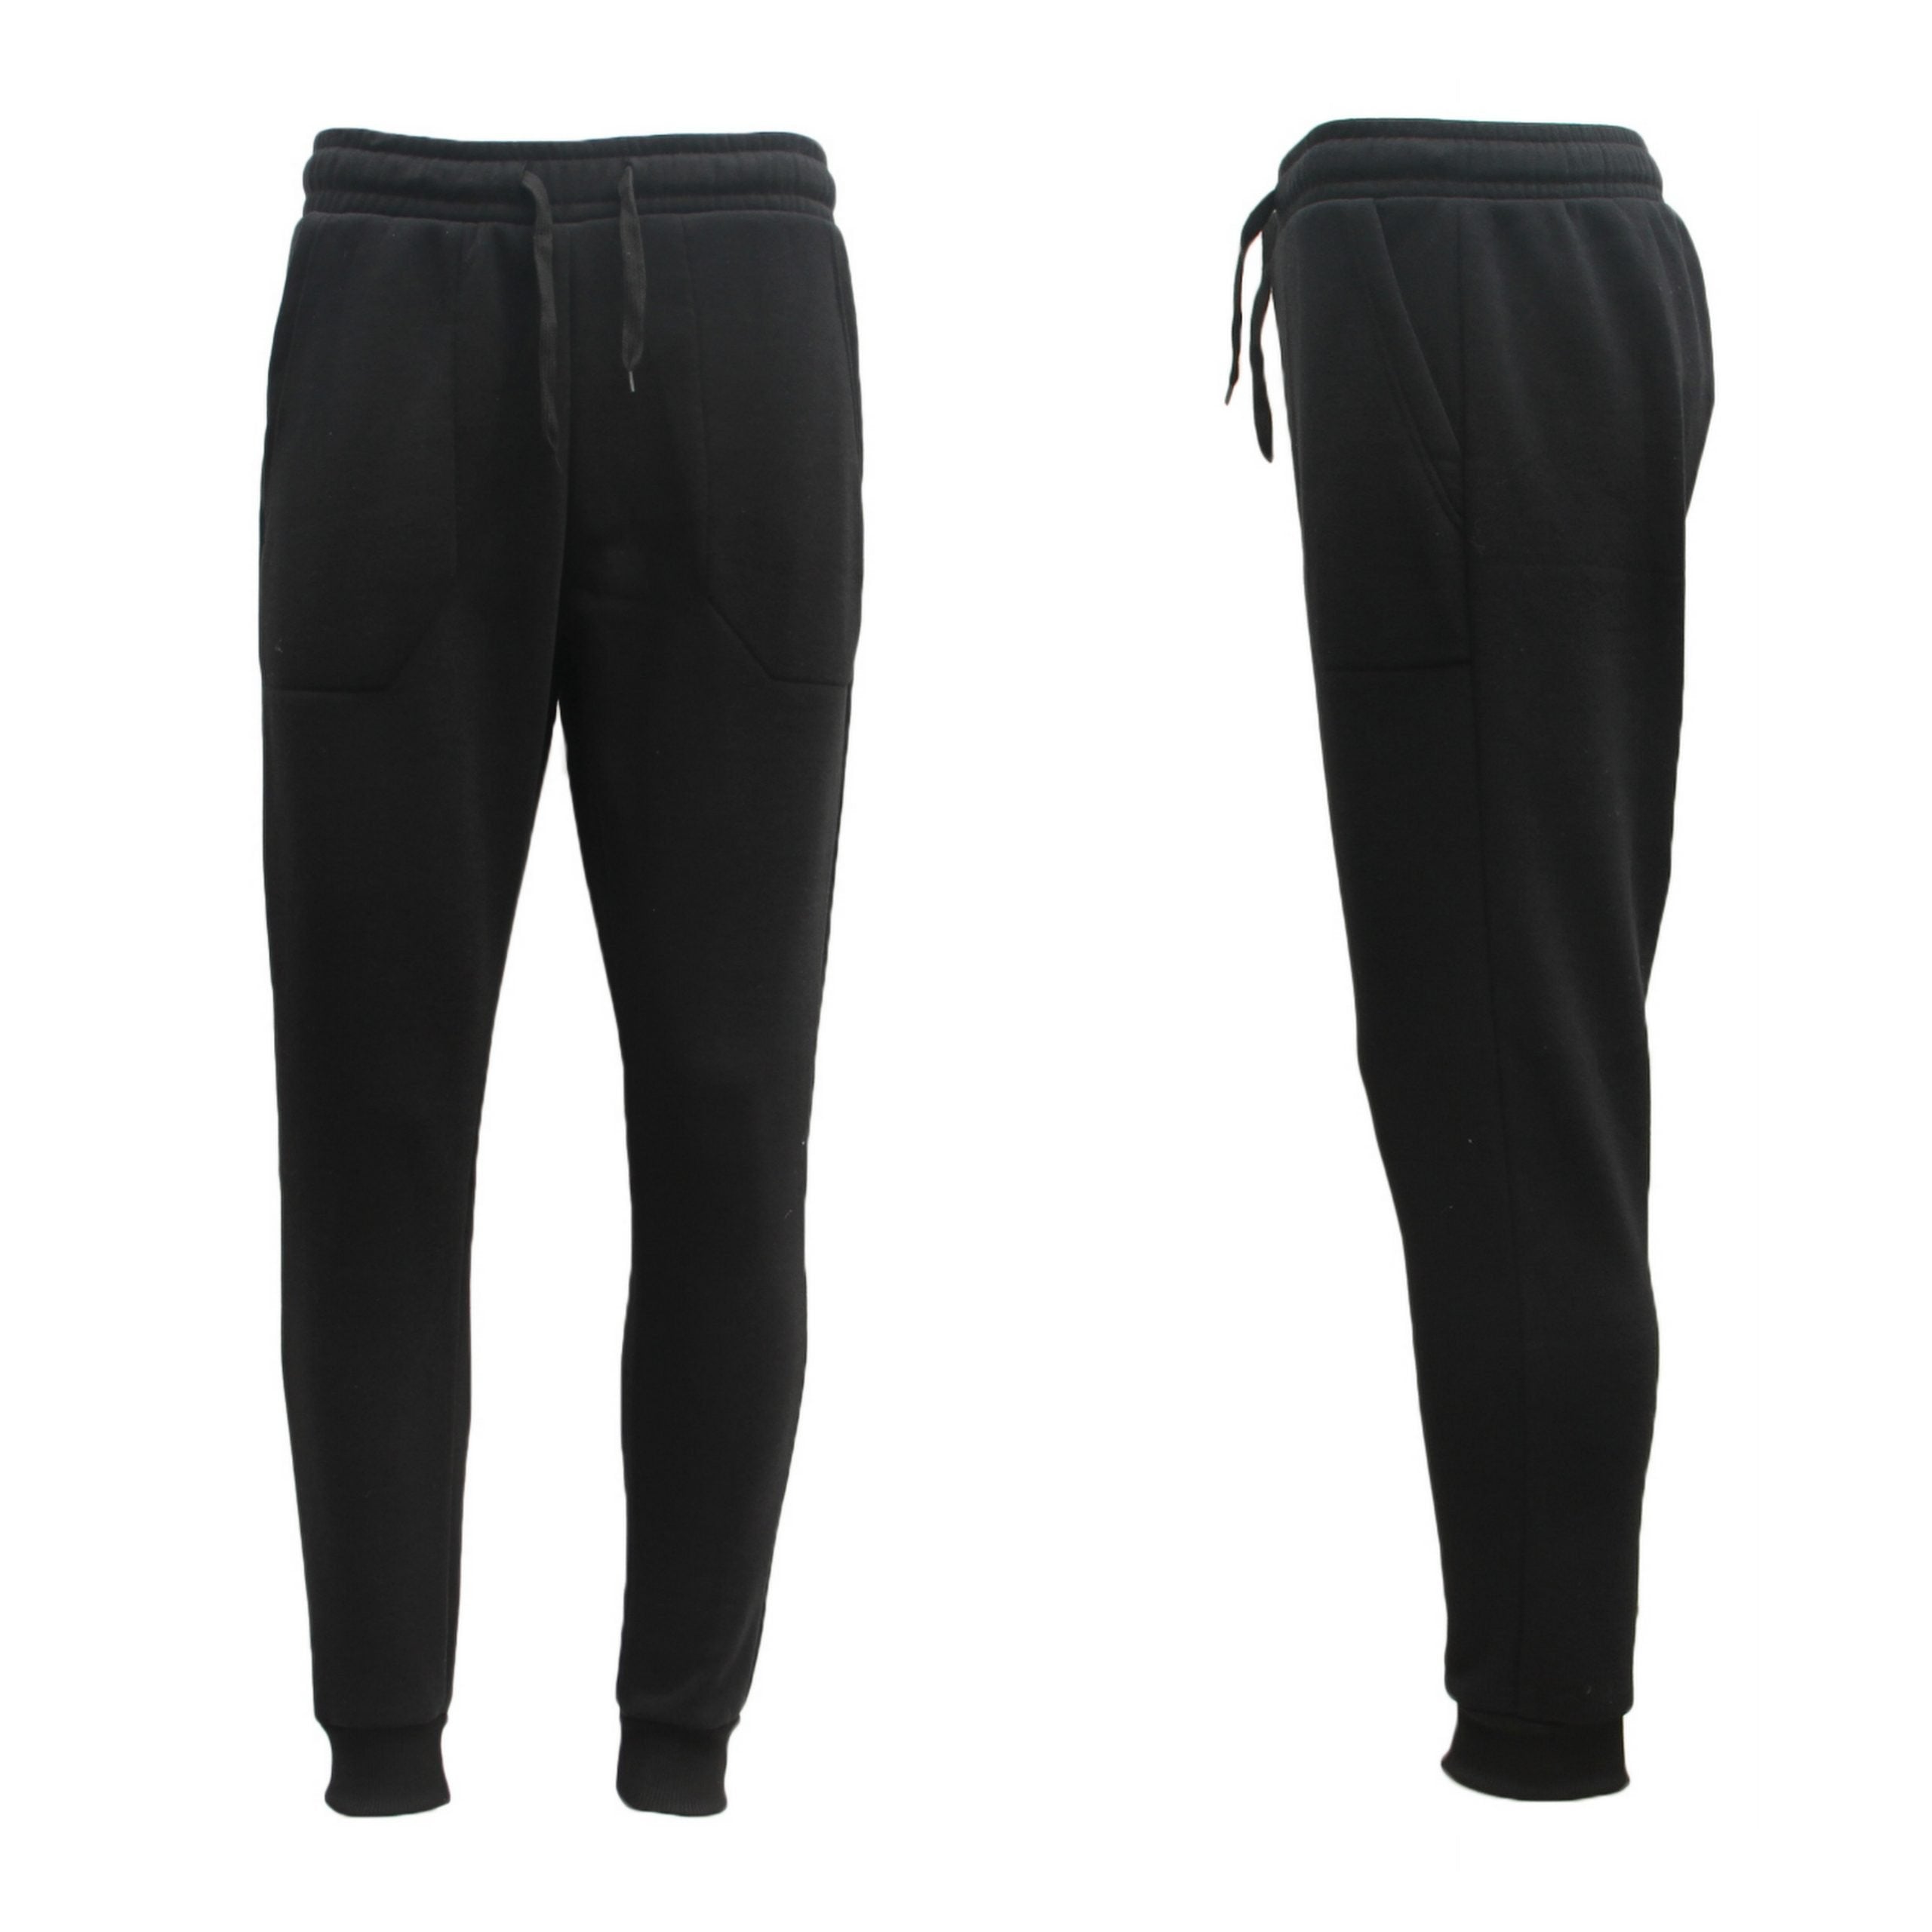 Mens Unisex Fleece Lined Sweat Track Pants Suit Casual Trackies Slim Cuff XS-6XL, Black, 3XL